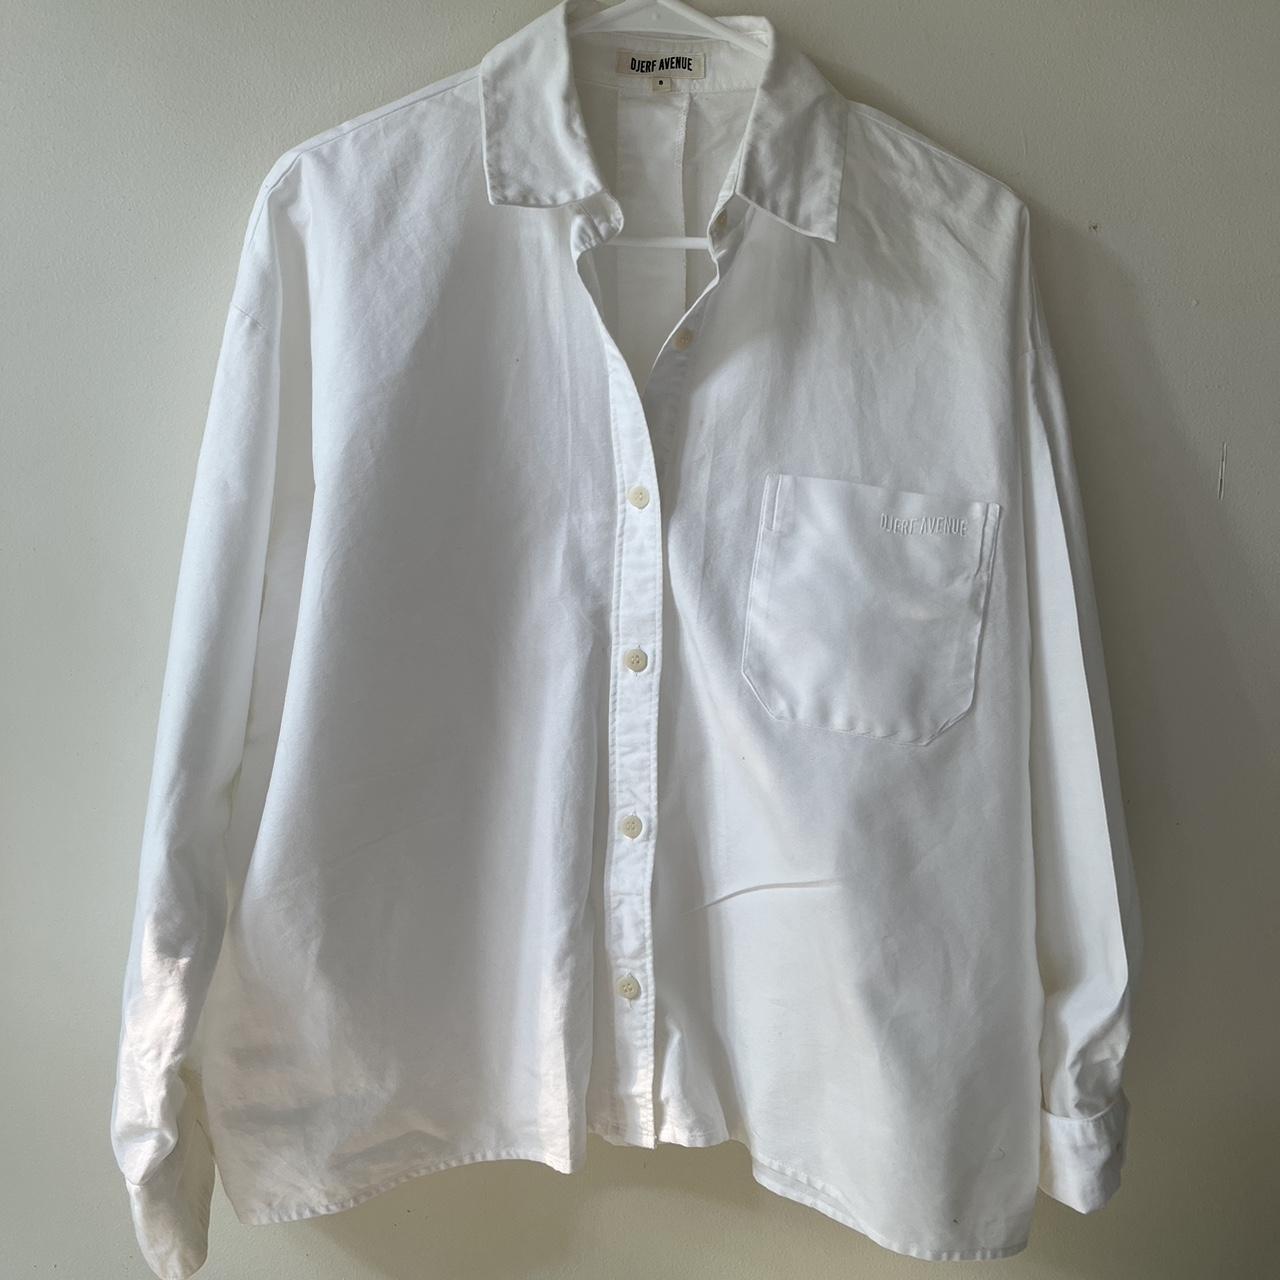 Djerf Avenue Women's White Shirt (2)